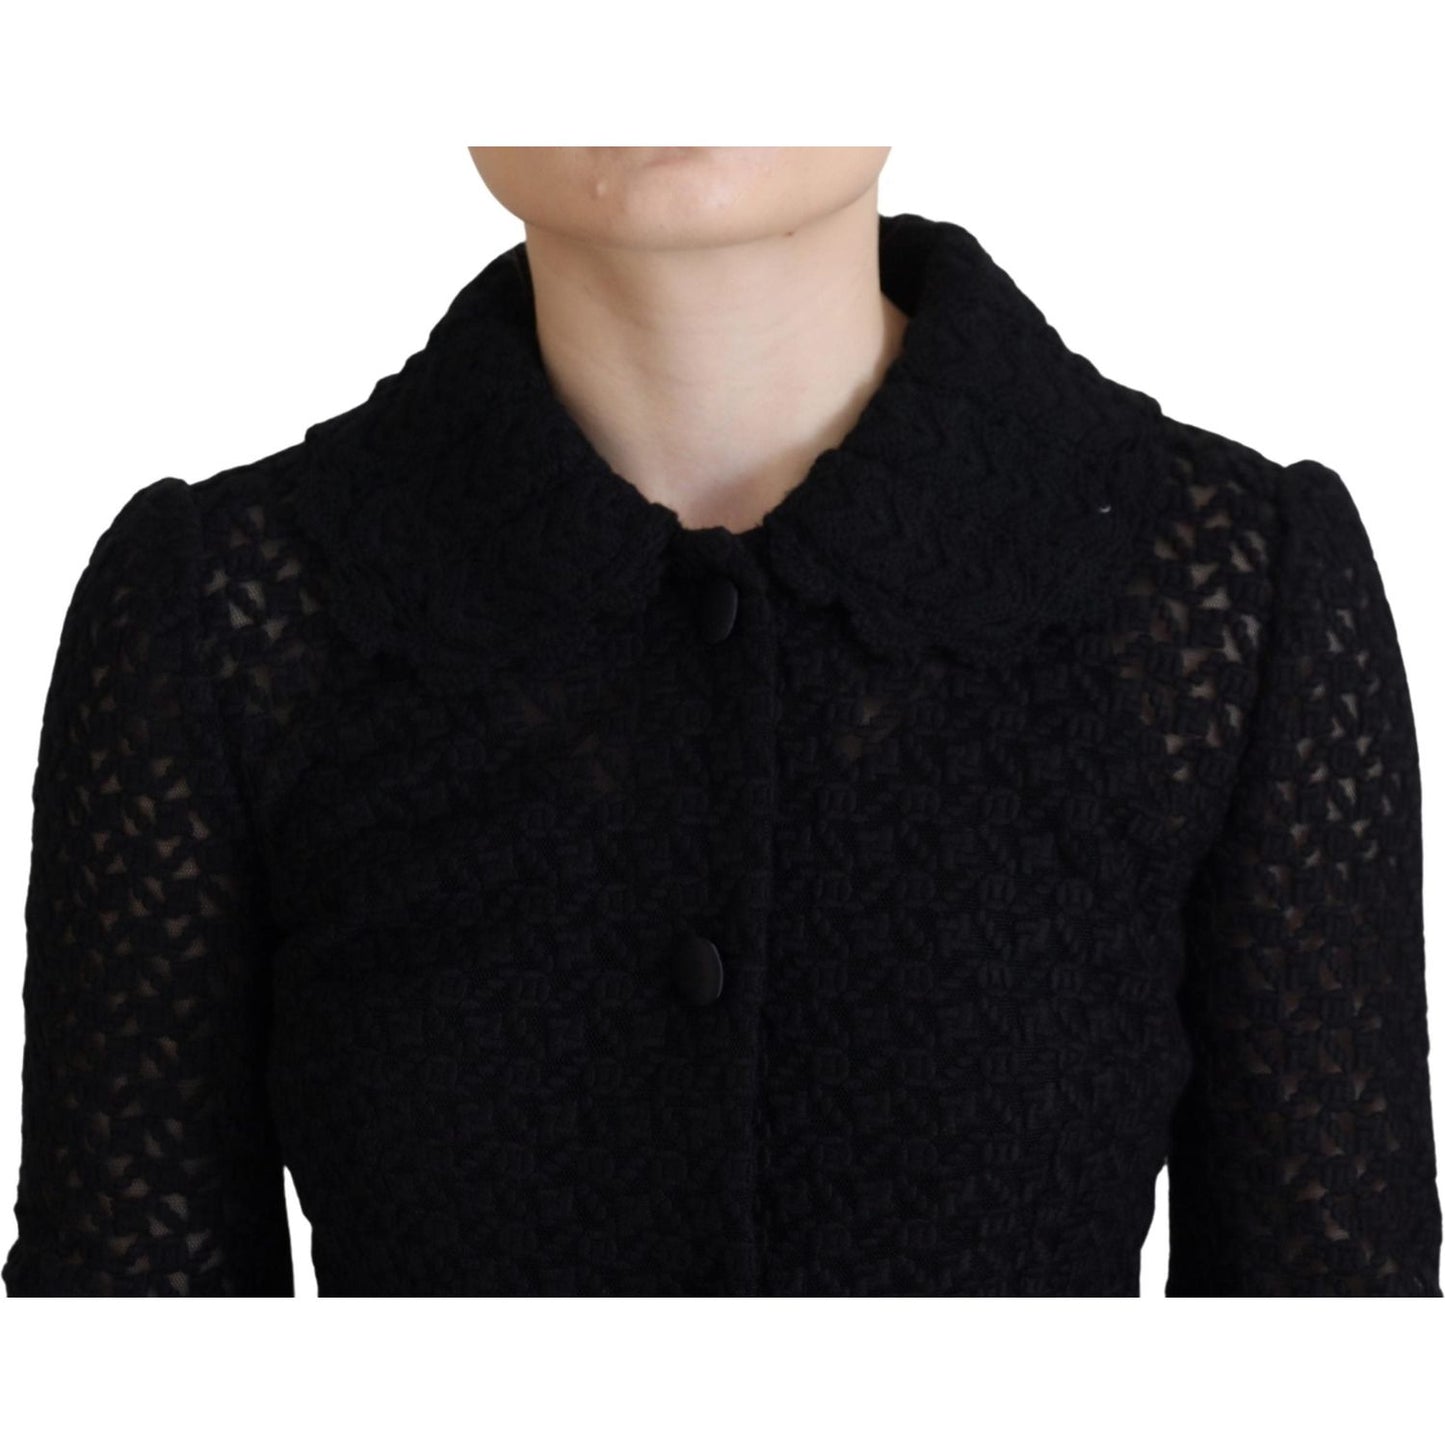 Dolce & Gabbana Elegant Black Wool Blend Button Down Jacket black-wool-knitted-button-down-collar-jacket